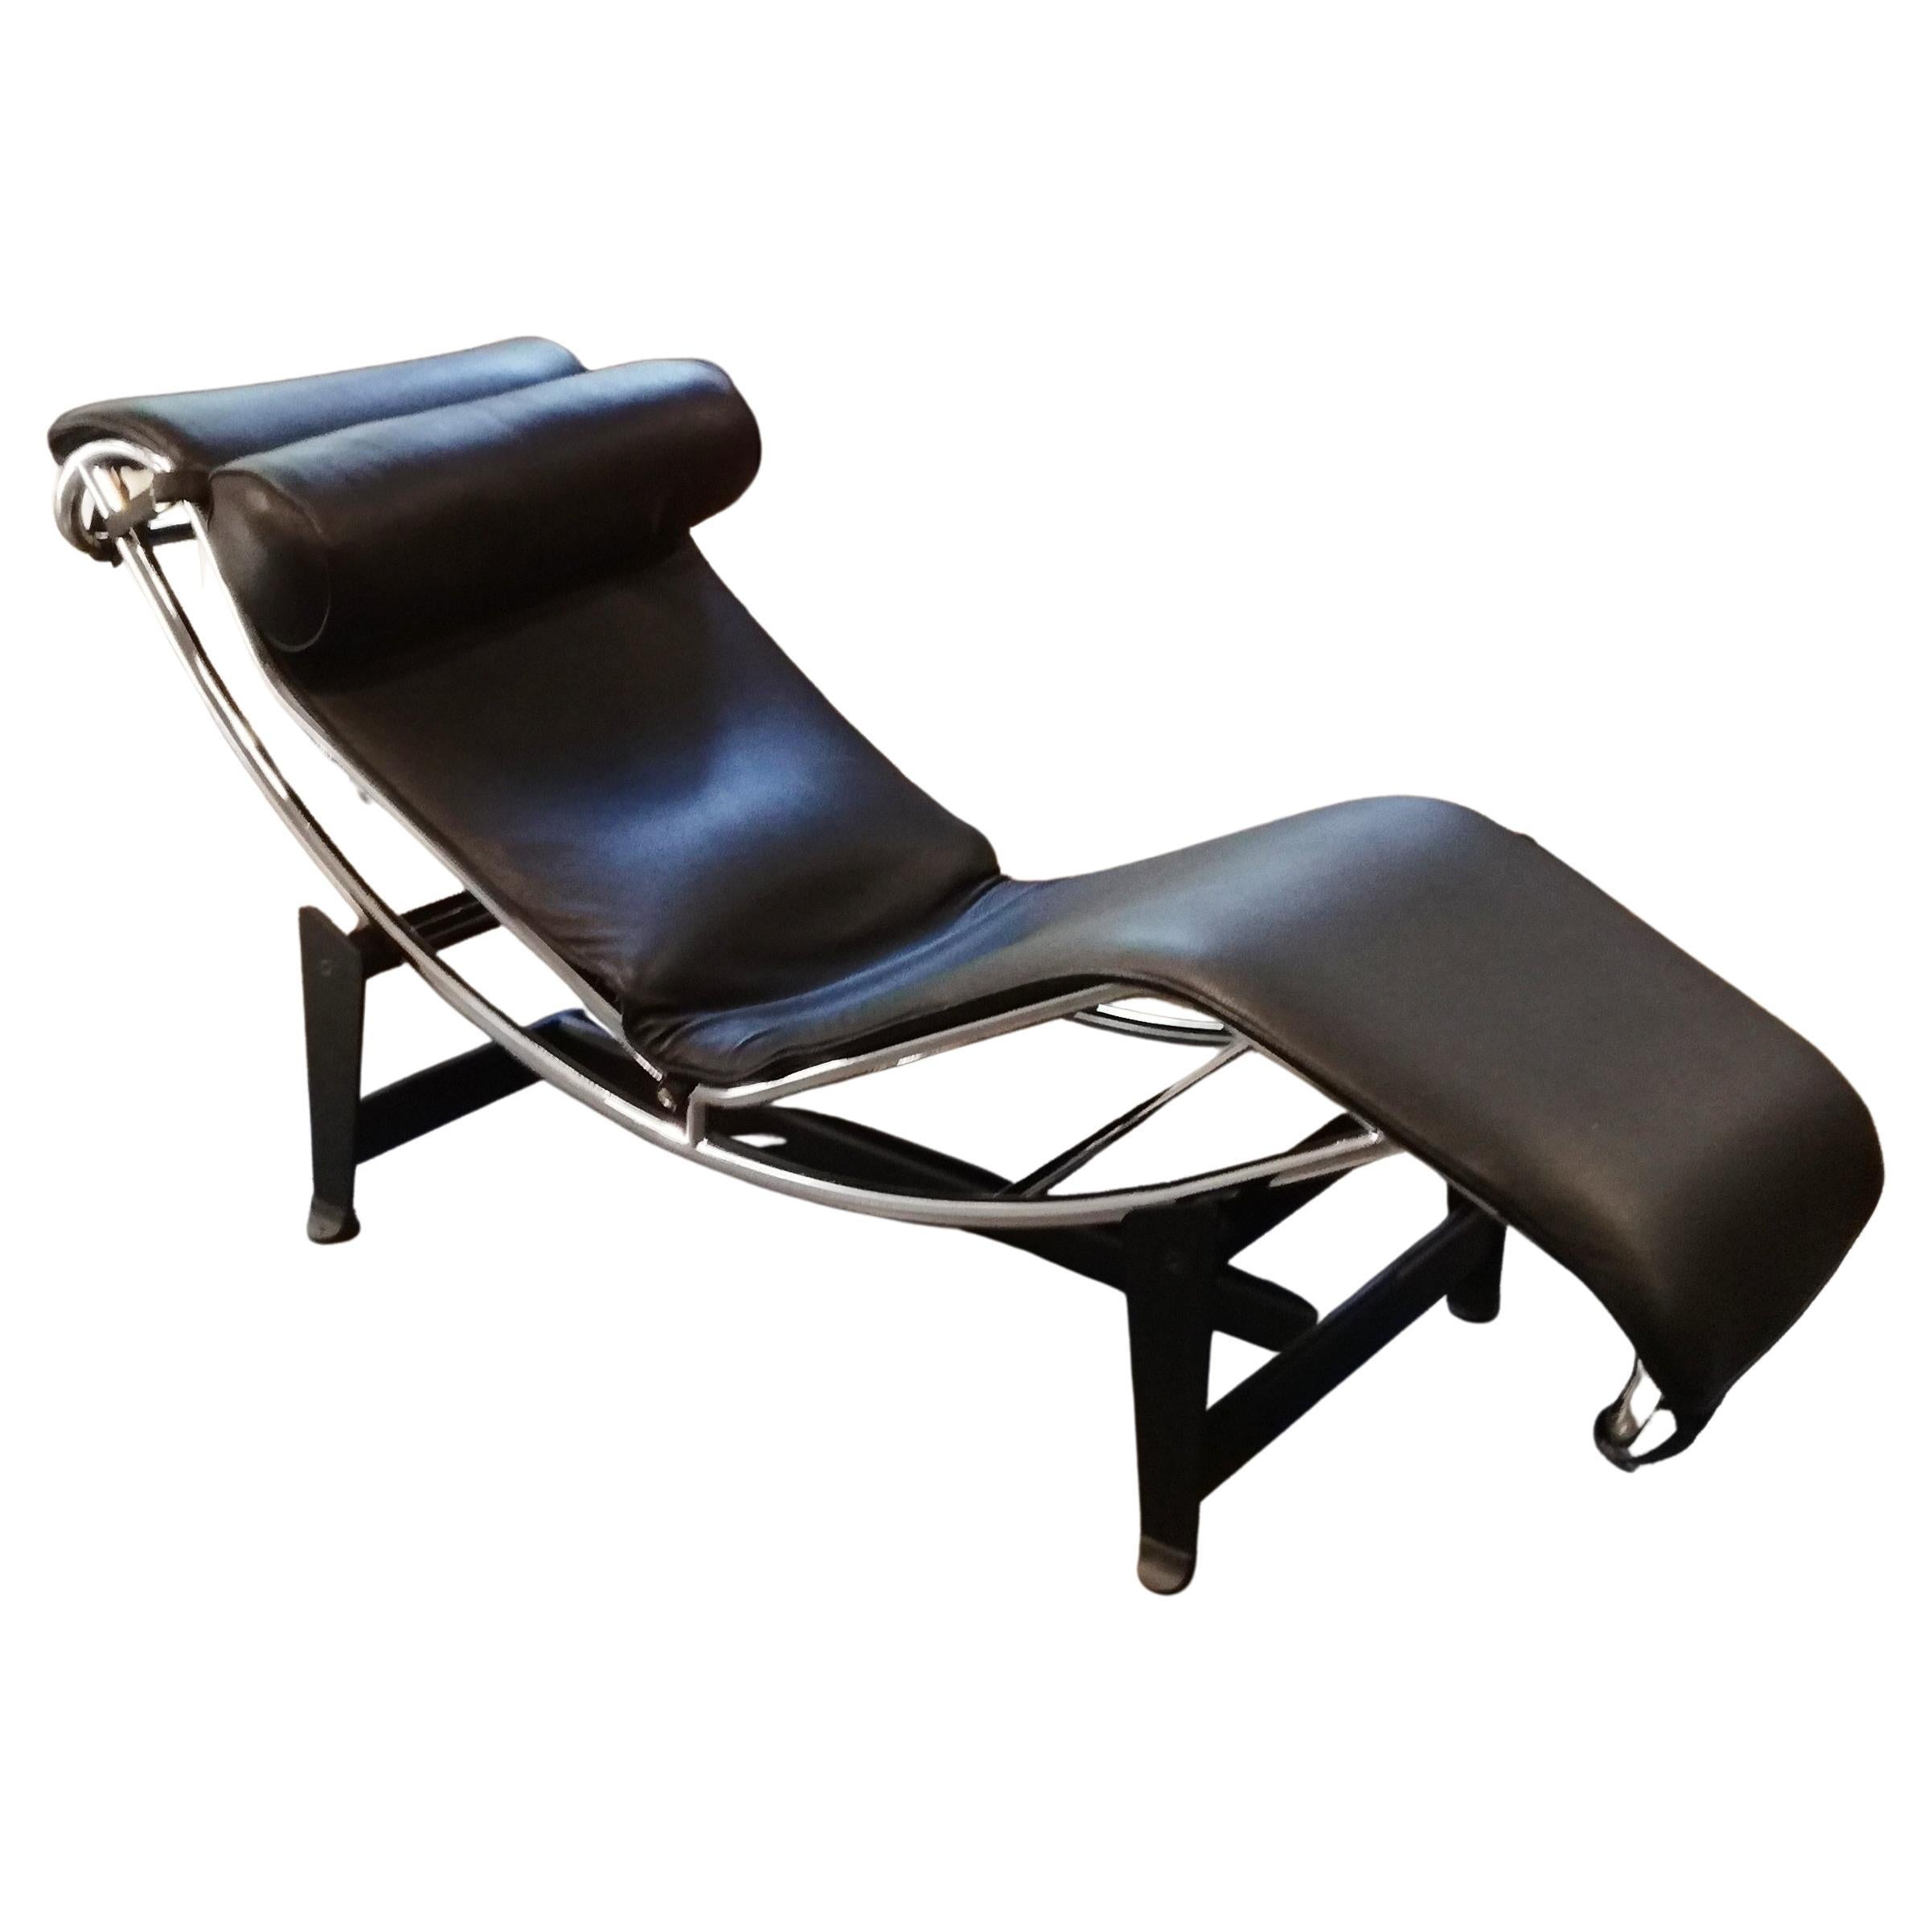 Loungue Chair Di Ispirazione Bauhaus, Anni 90 For Sale